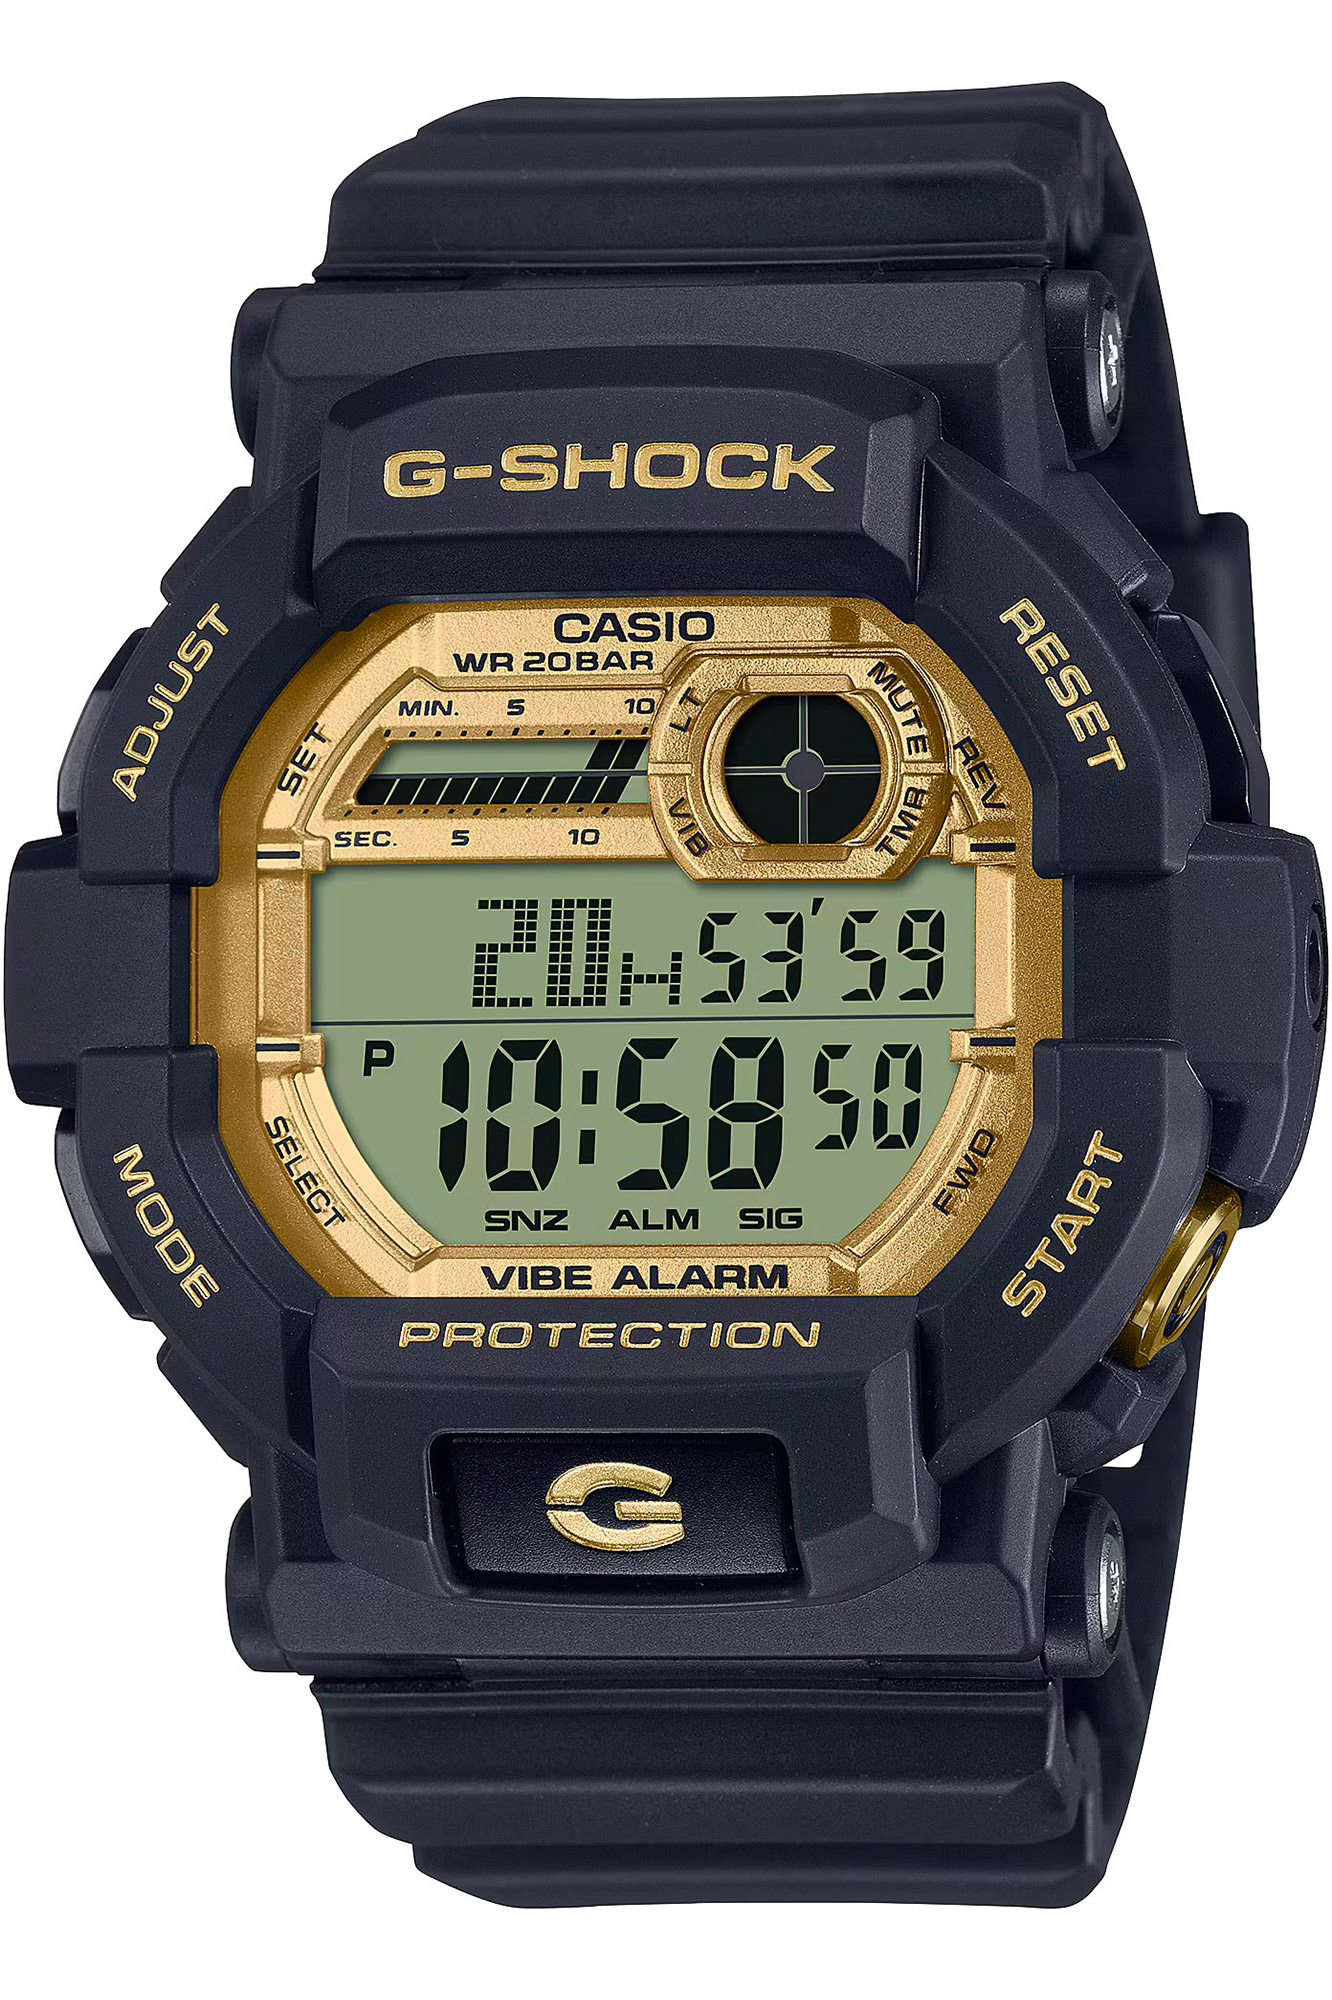 Watch CASIO G-Shock gd-350gb-1er